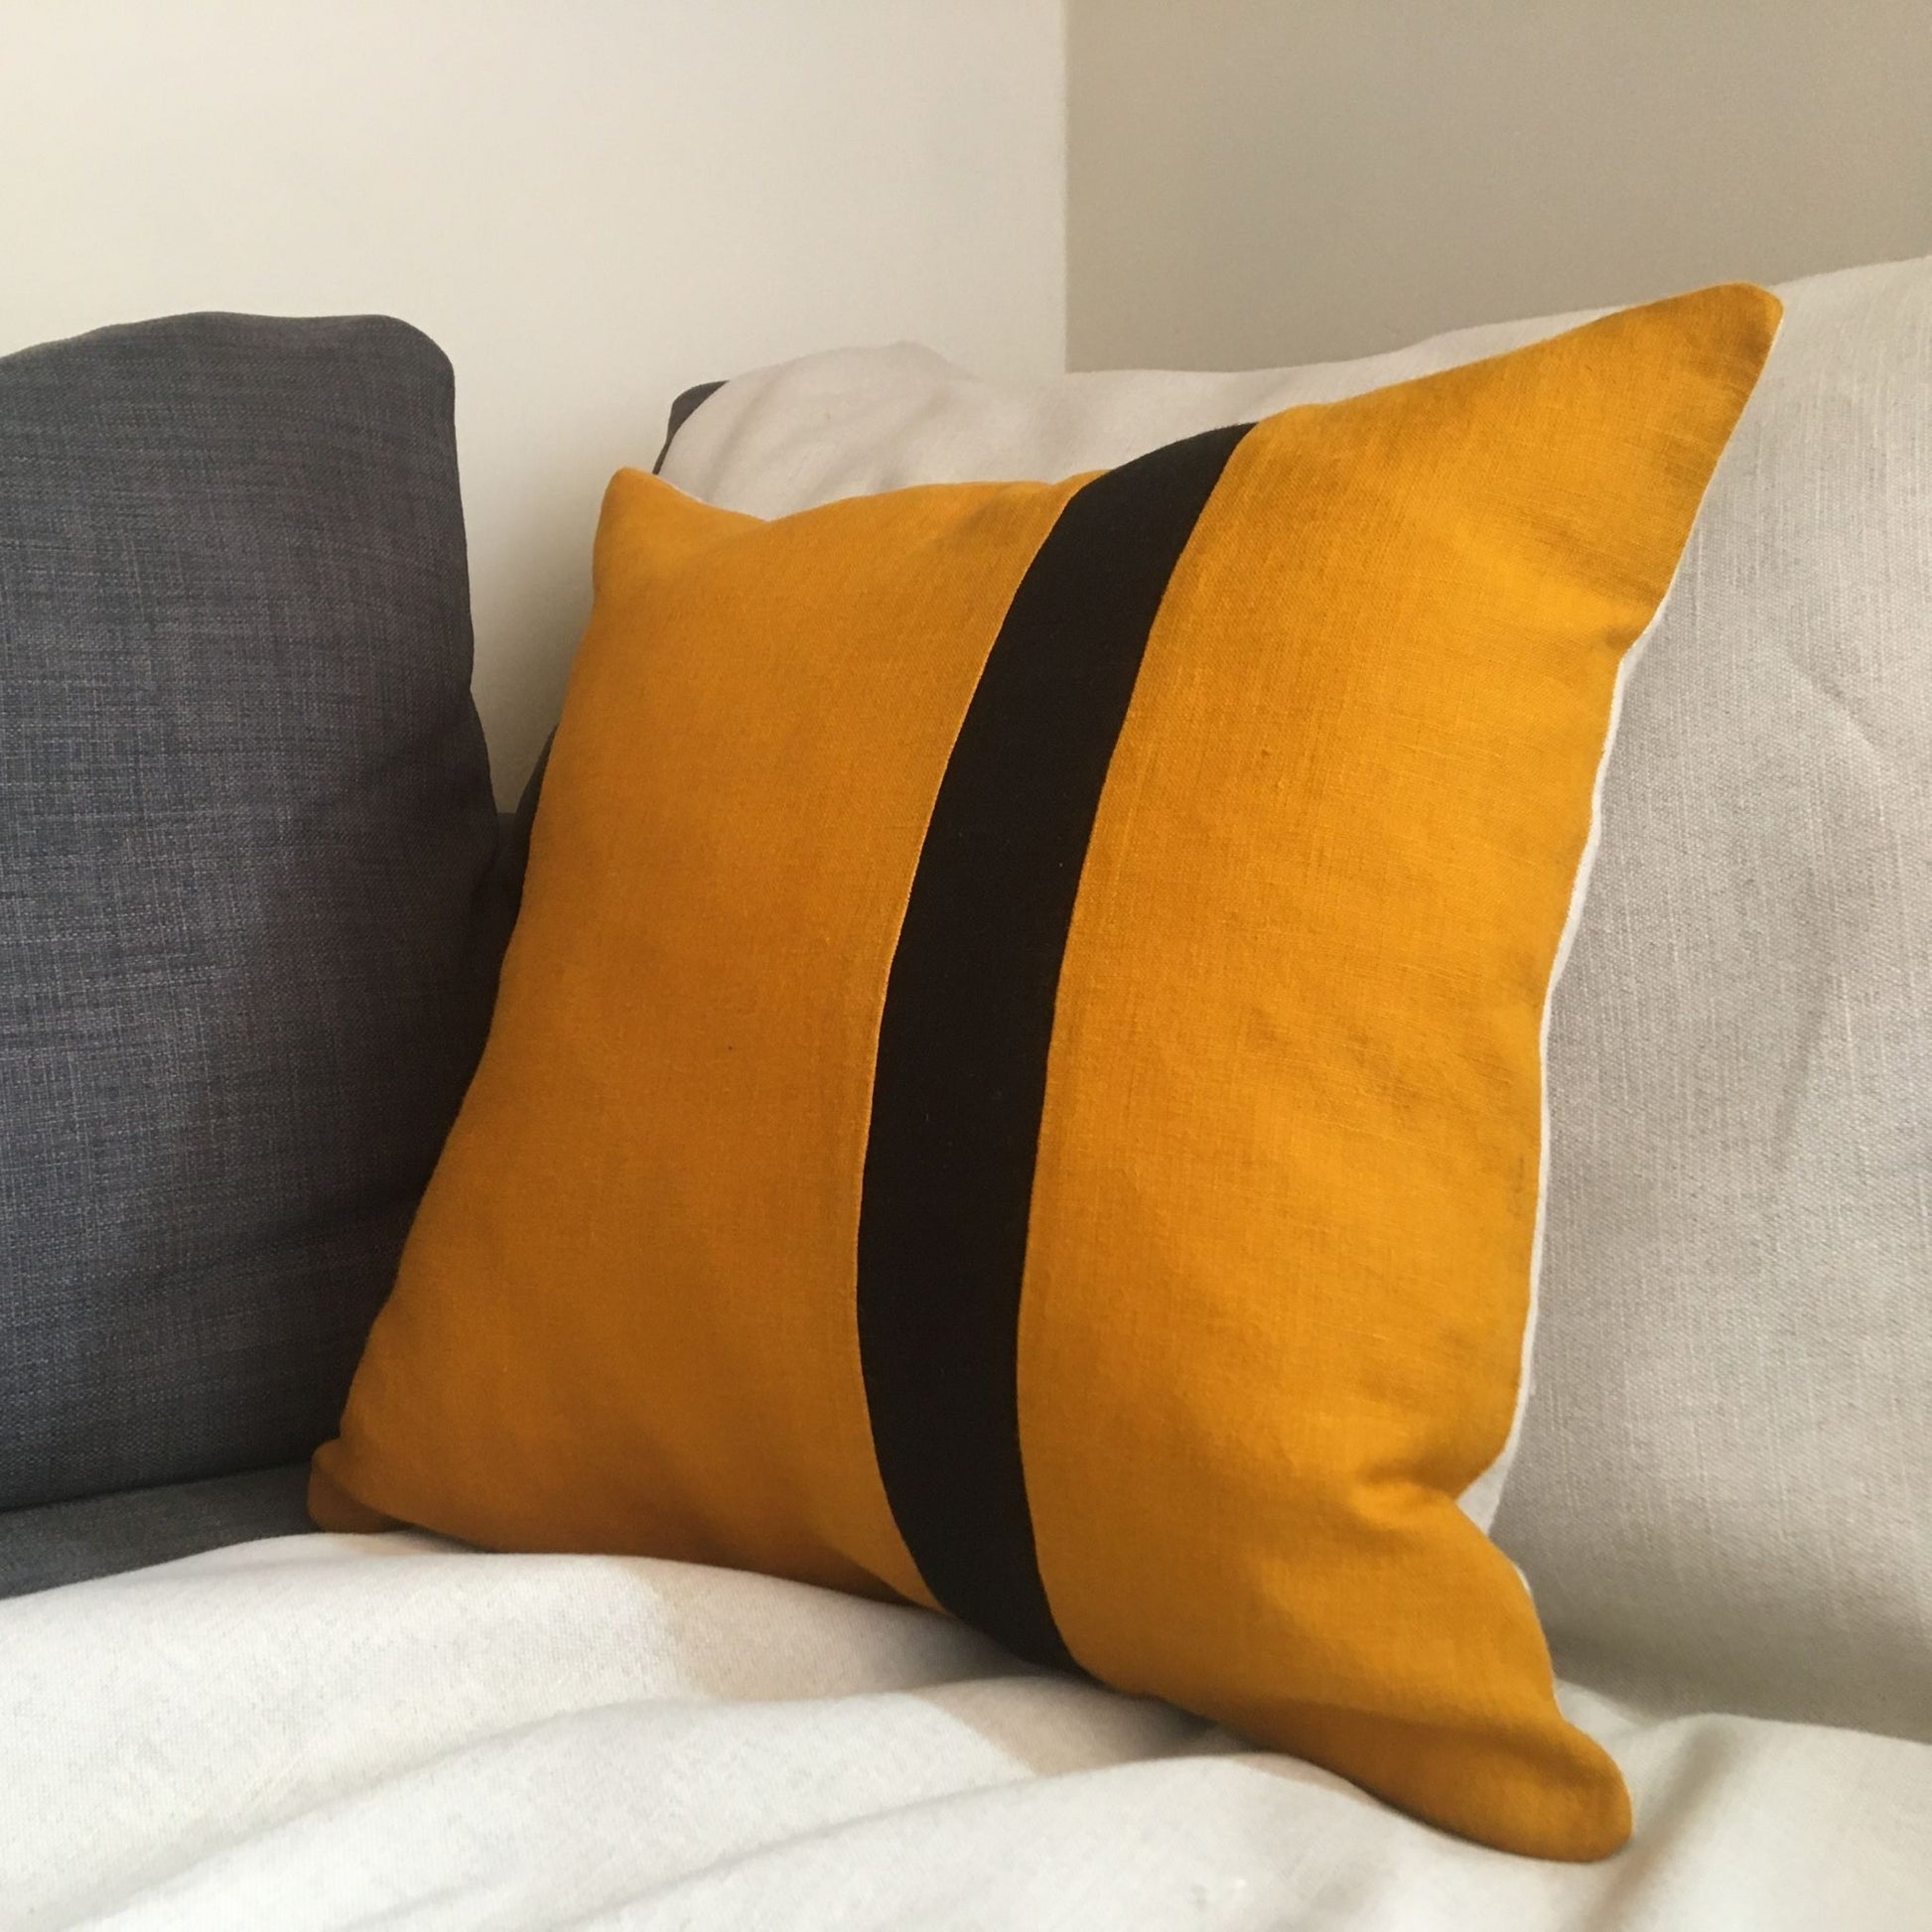 Bee cushion on grey sofa with black stripe